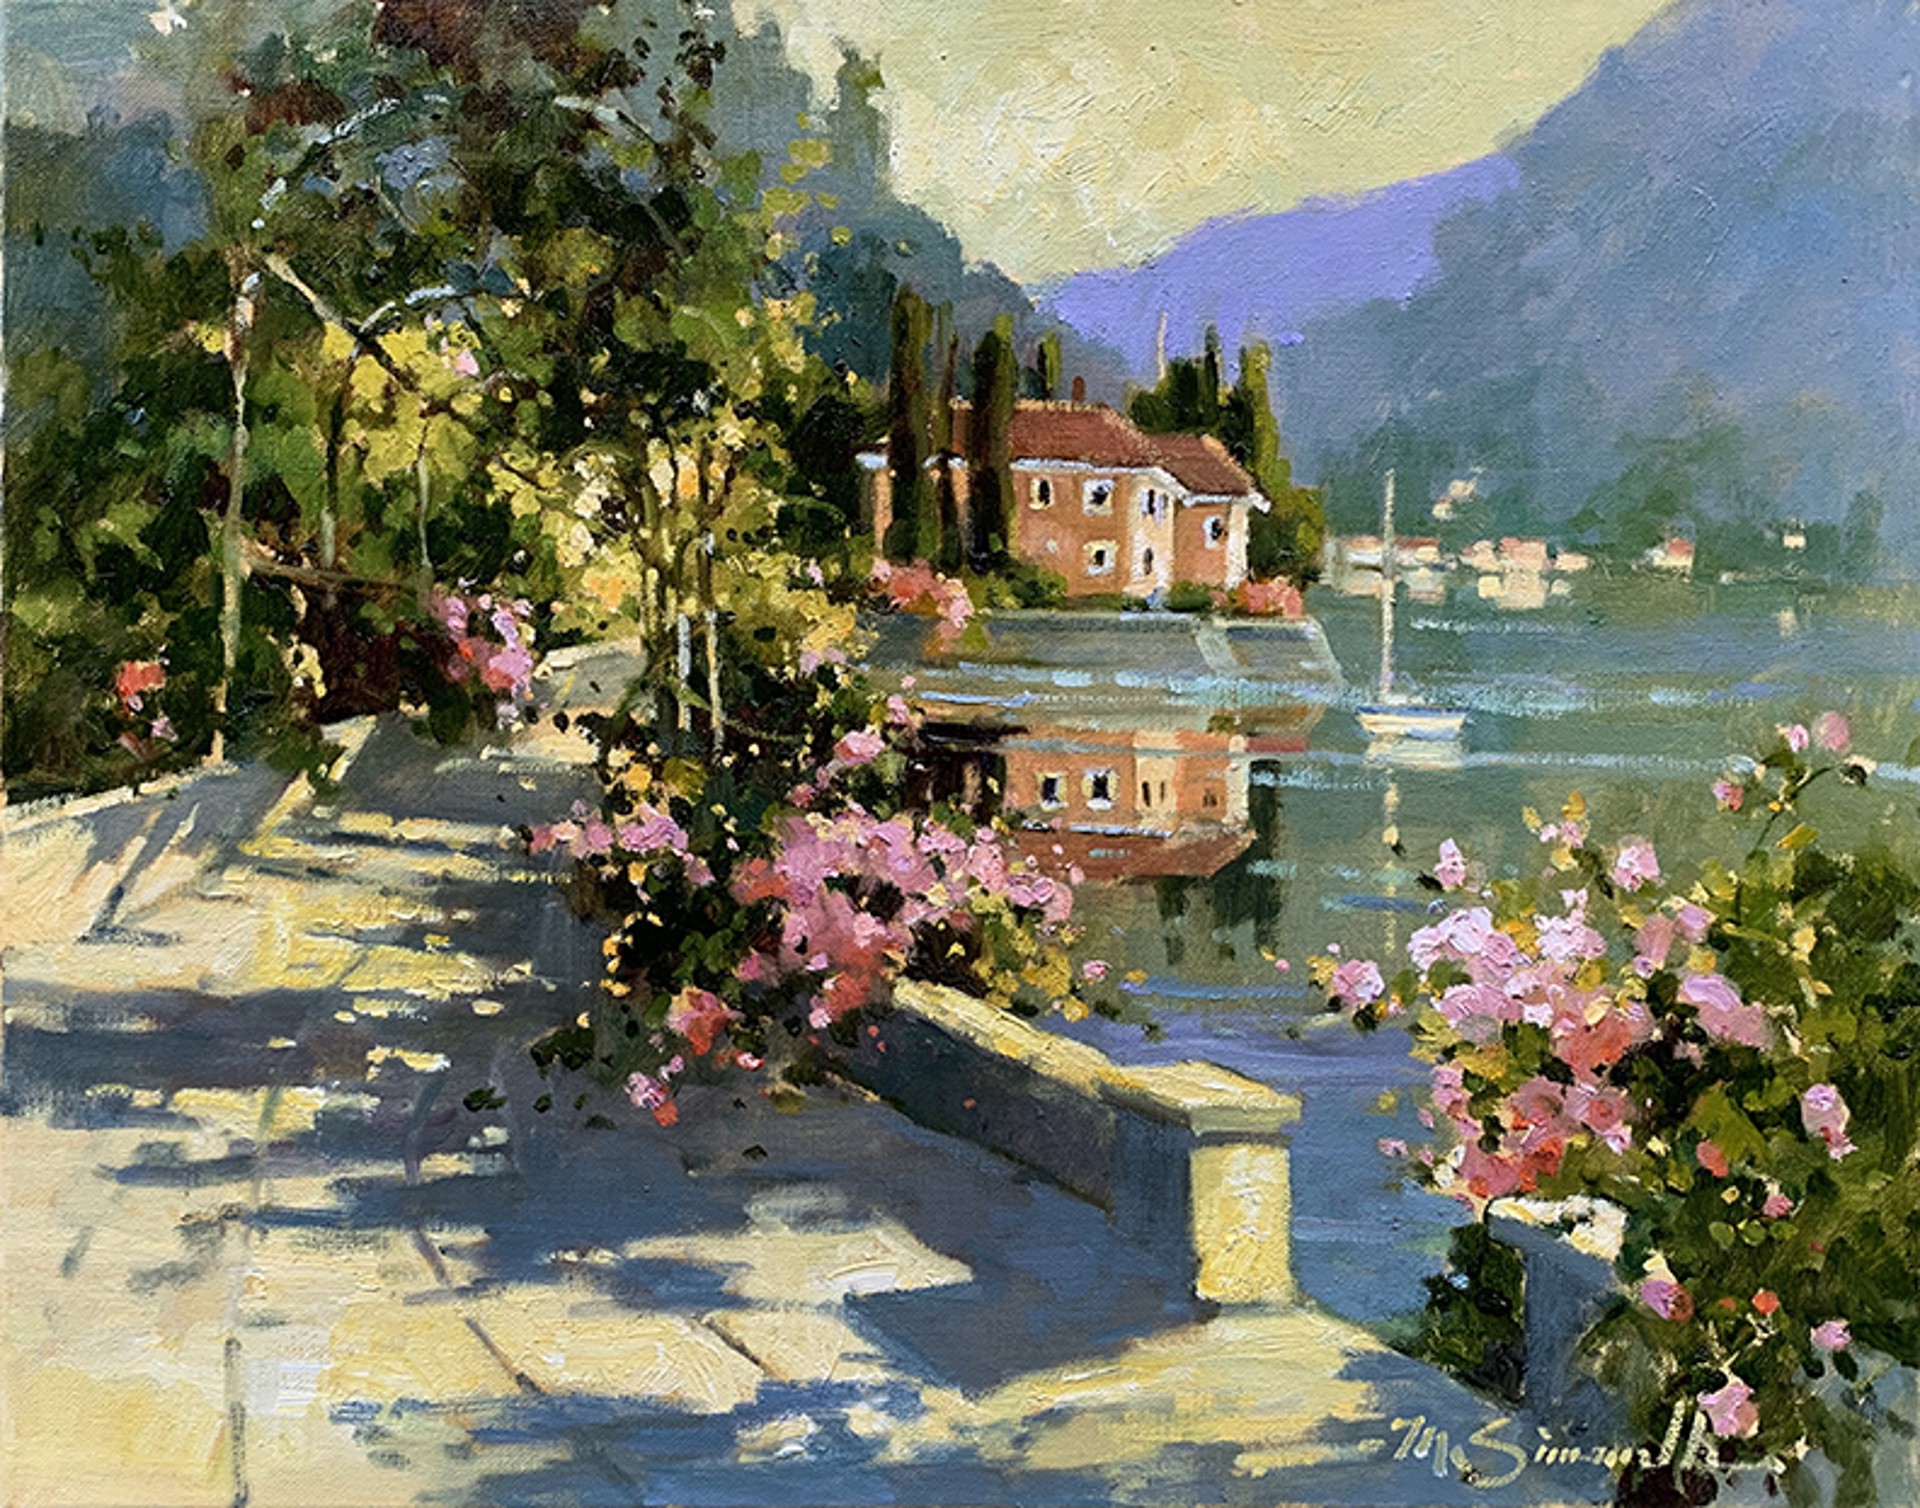 Lake Como by Marilyn Simandle